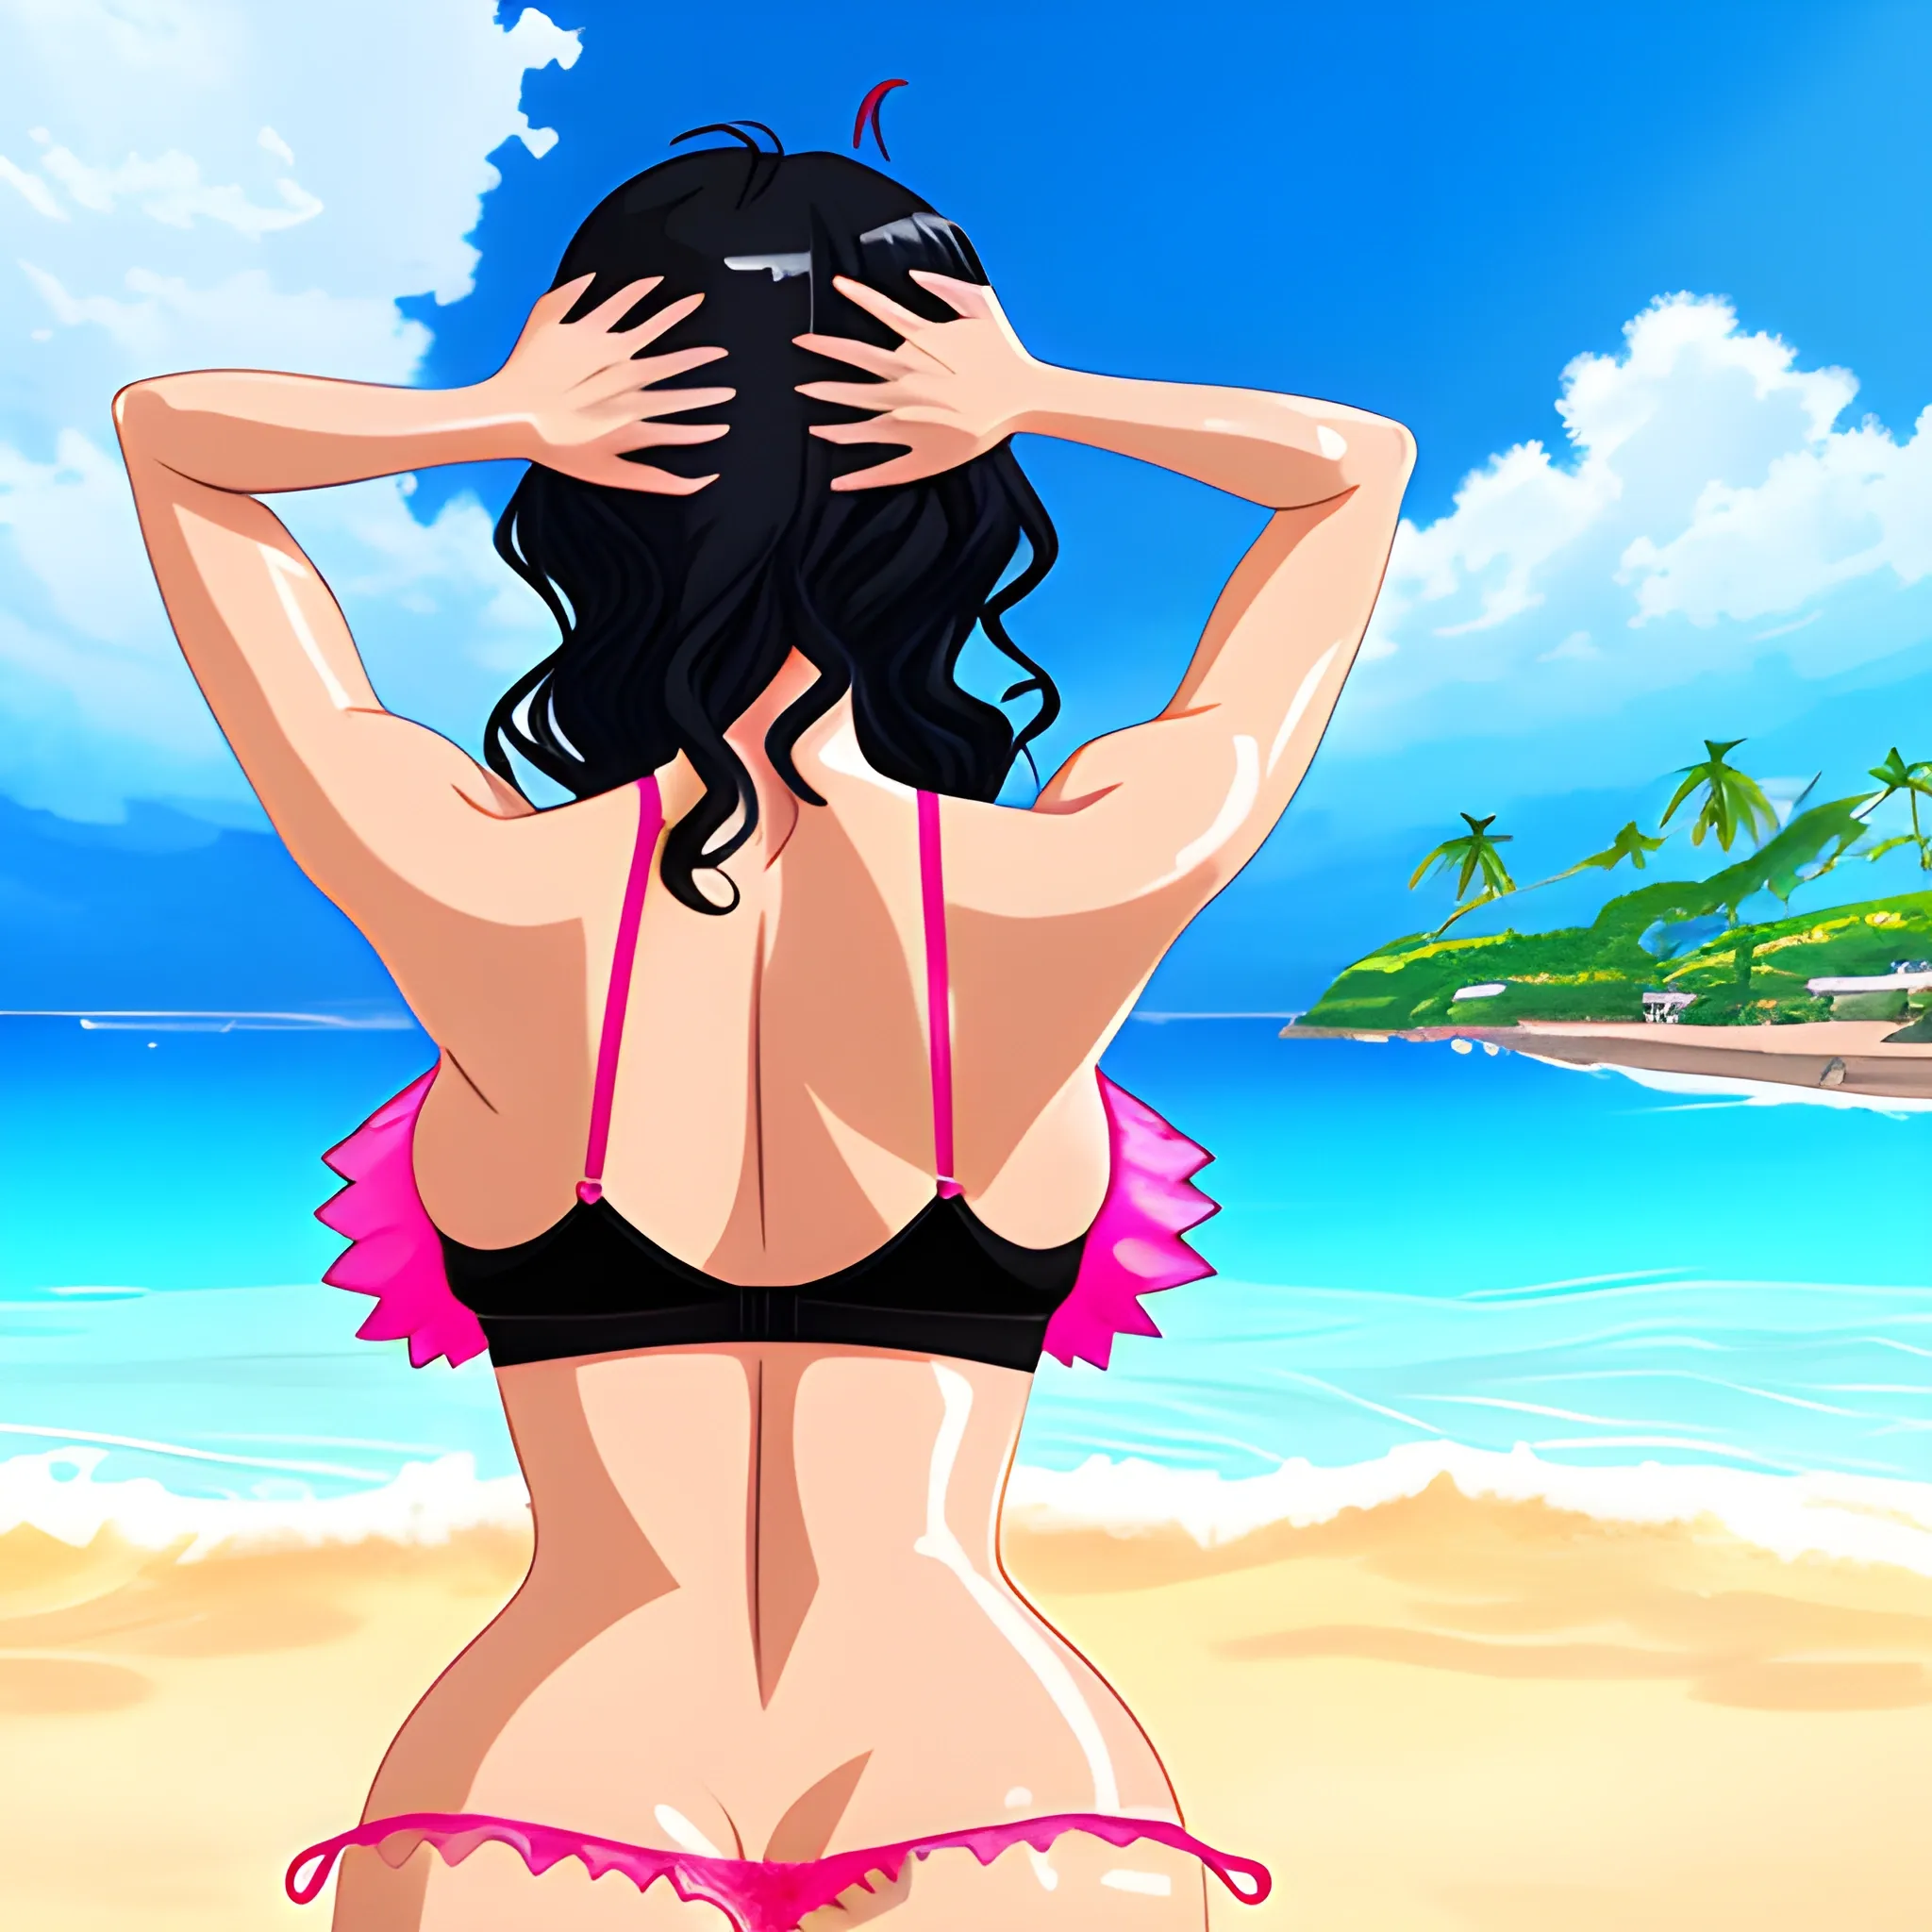 Anime,beach,rear view,cute girl,tannedskin,black curly hair,pink bra,pinkpanties,cartoon,hand under big butt, , Cartoon,big breast, in water, shark fin